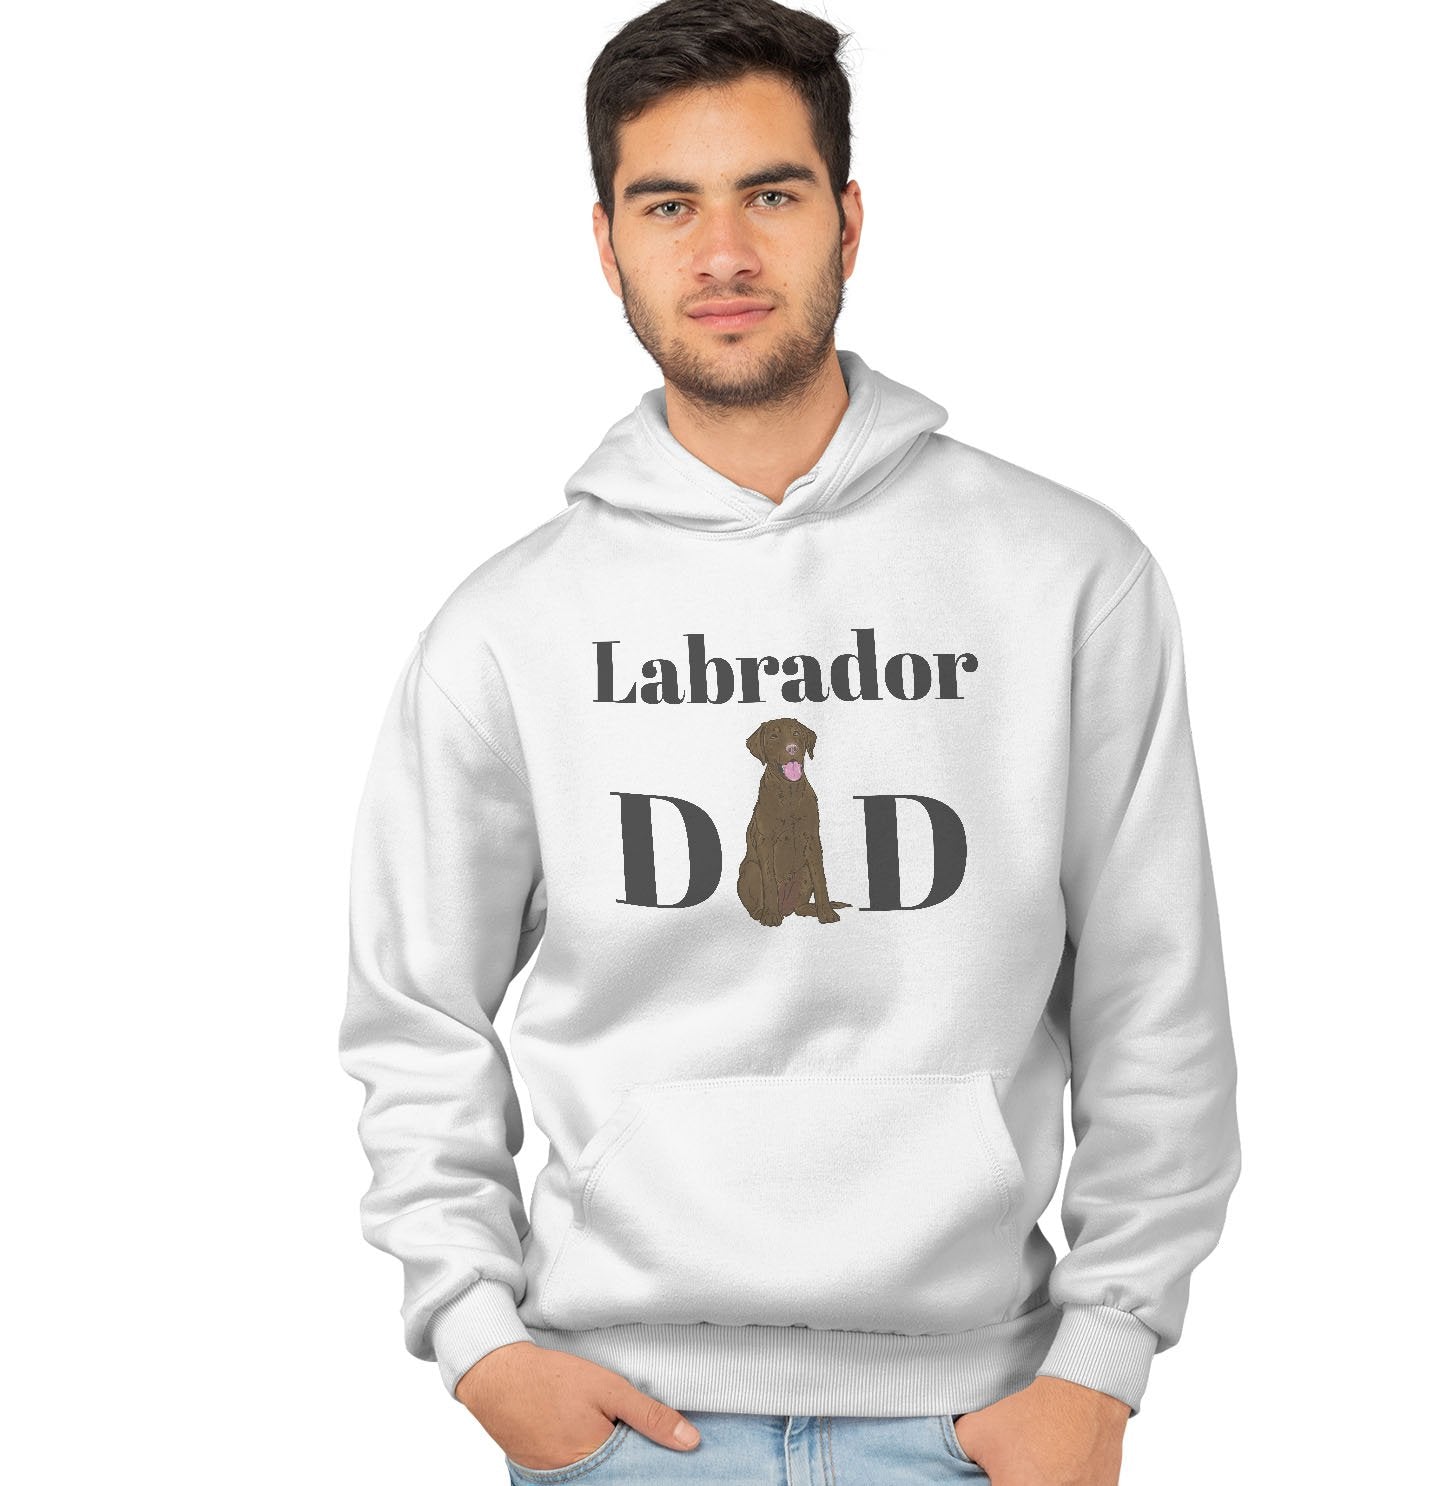 Chocolate Labrador Dad Illustration - Adult Unisex Hoodie Sweatshirt